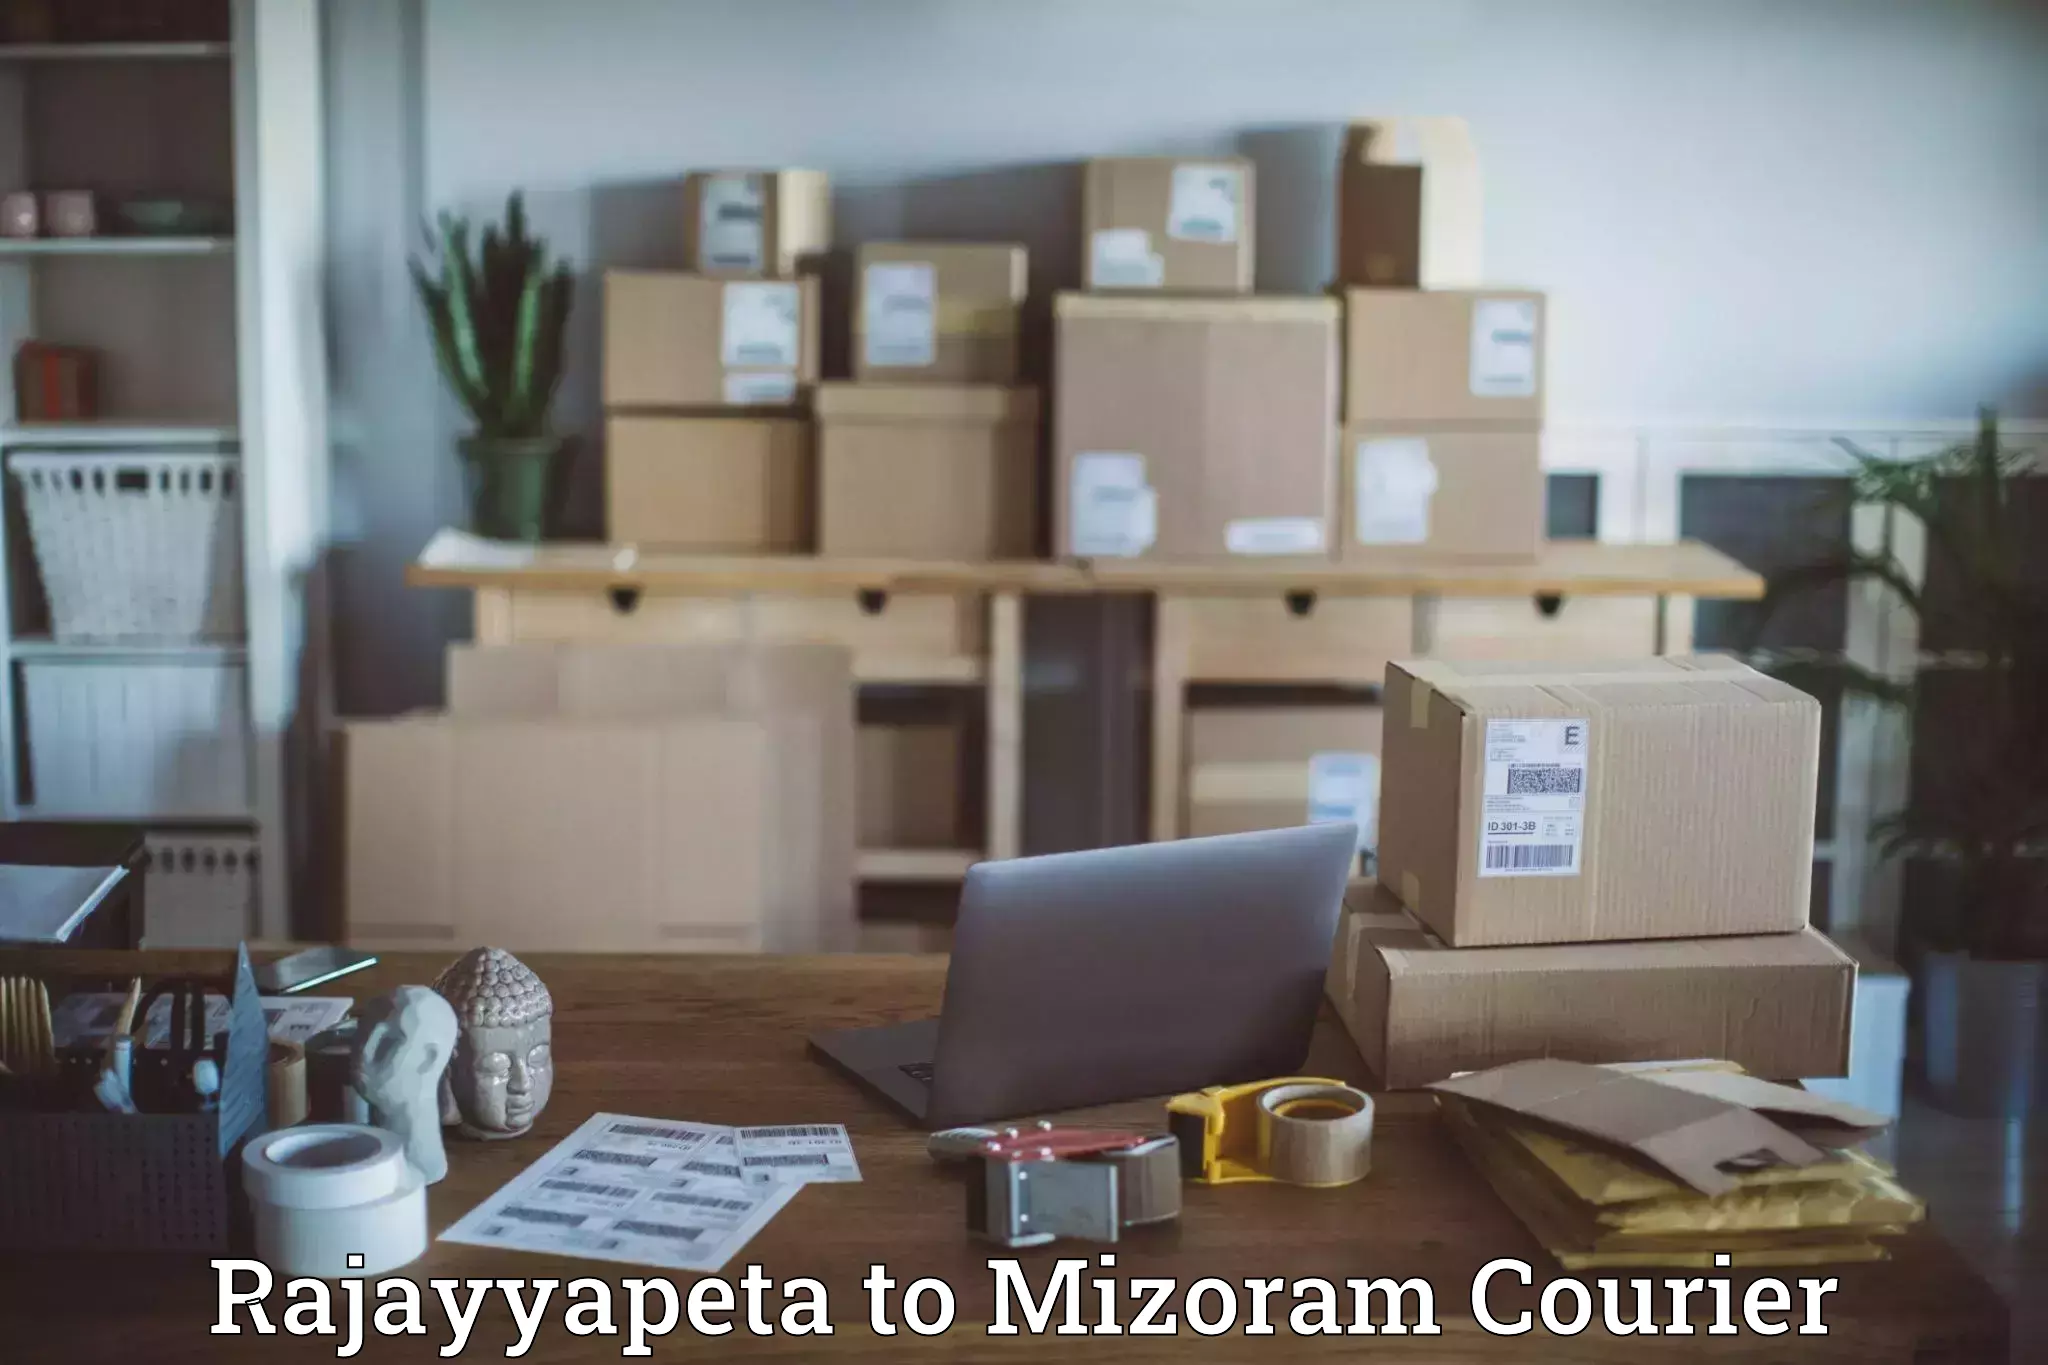 Package delivery network Rajayyapeta to Mizoram